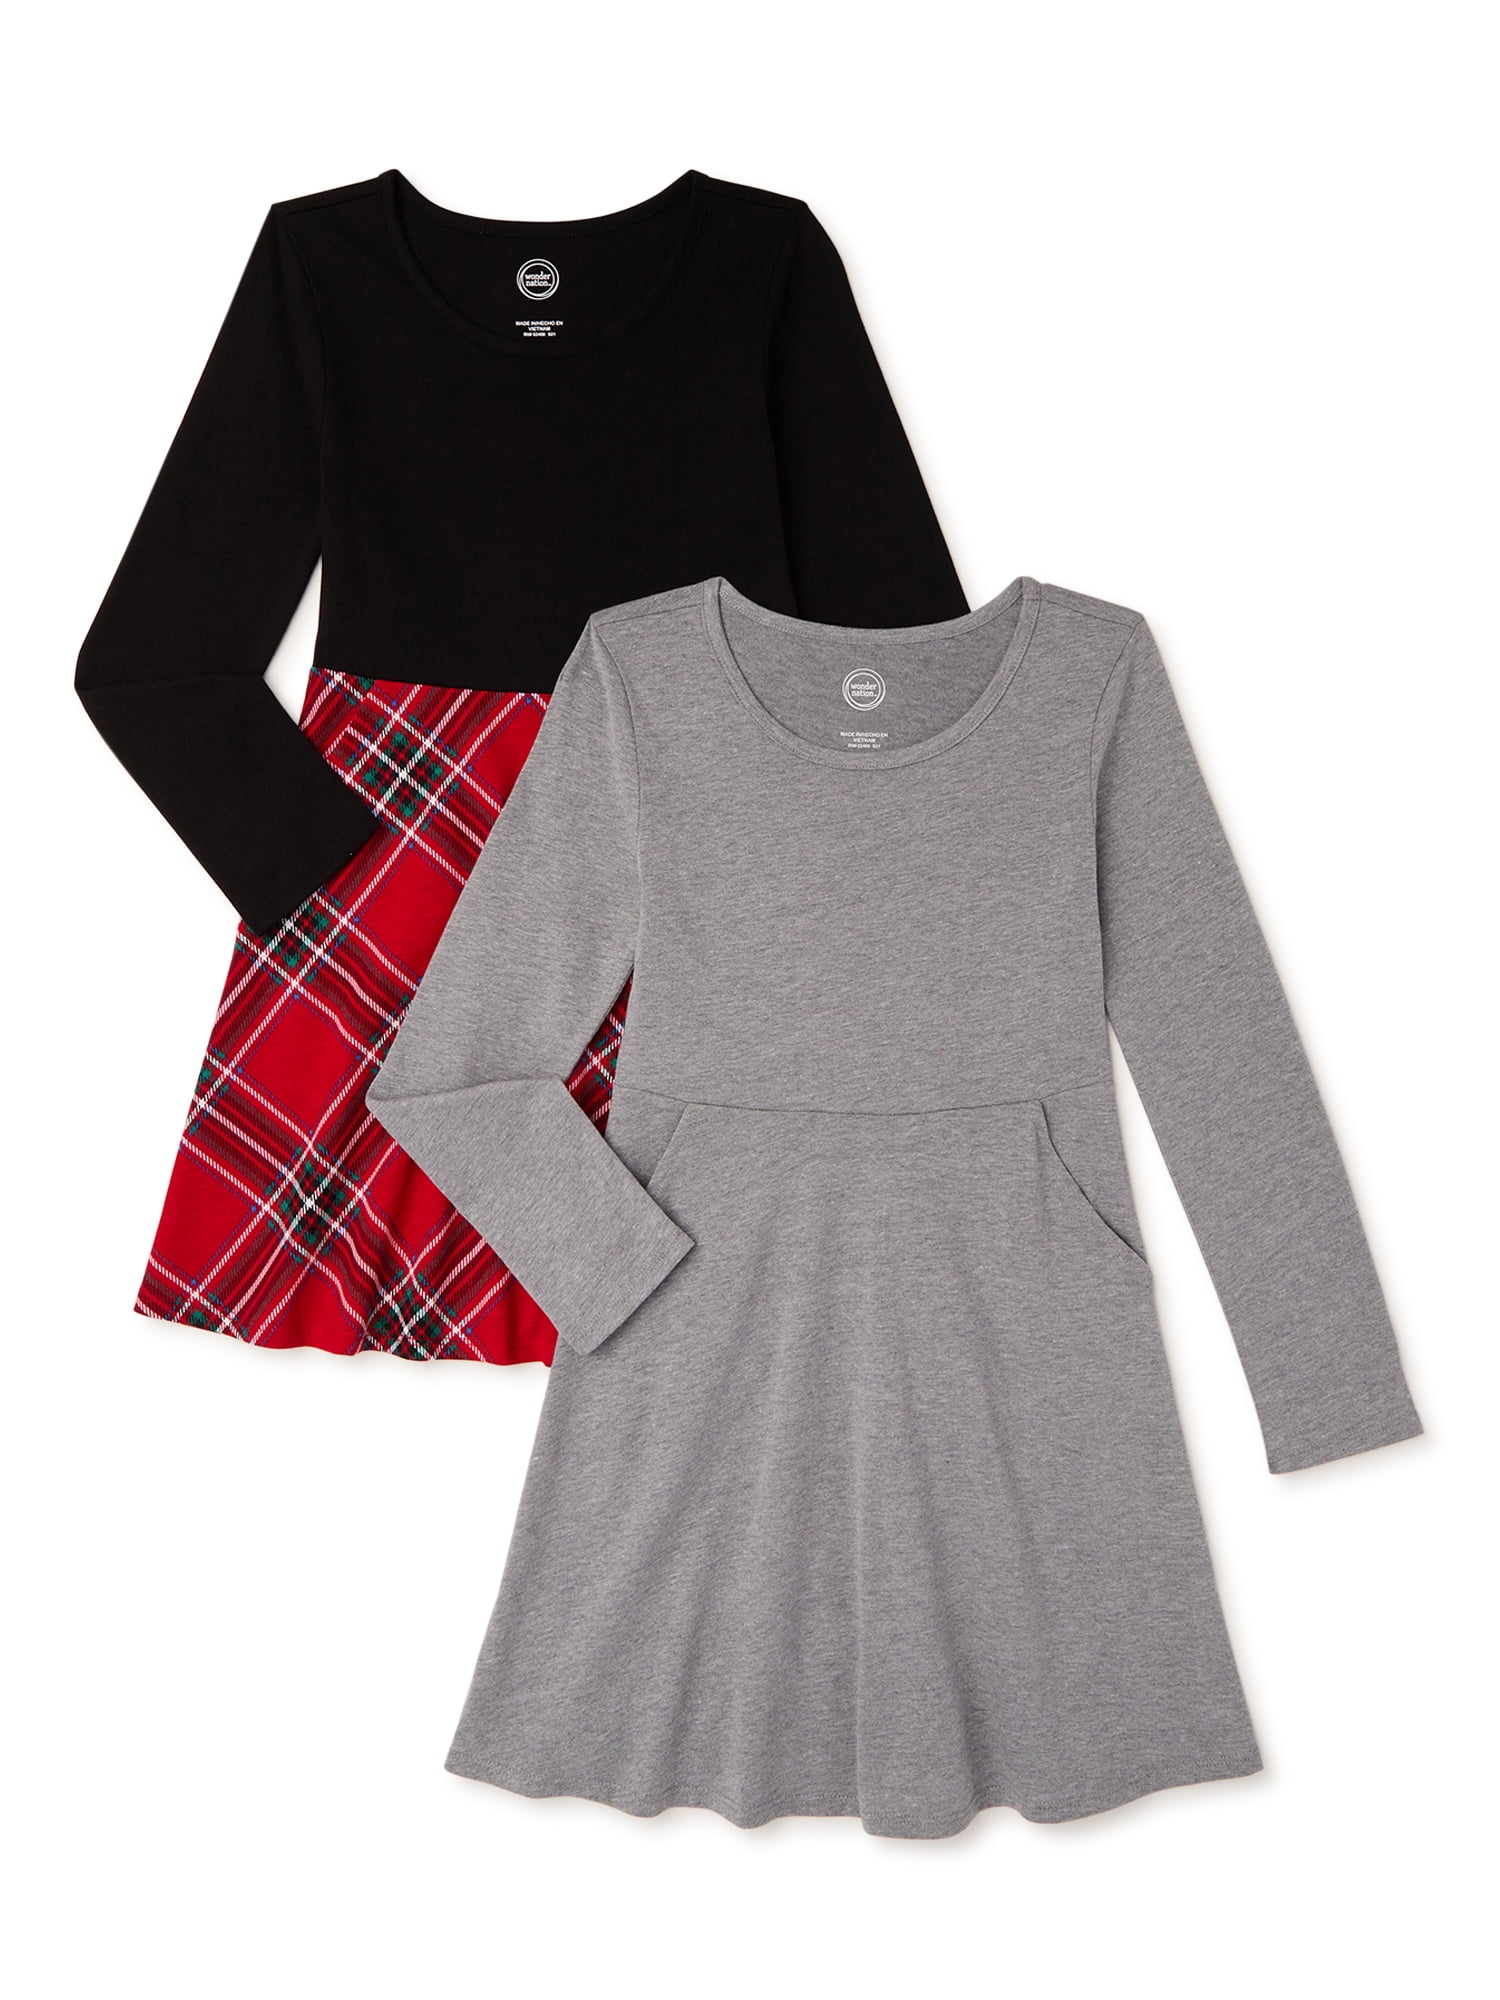 Gymboree Prep Perfect Gray Sweater Dress W/ Orange Bow Size 4 5 6 7 8 10 NEW 